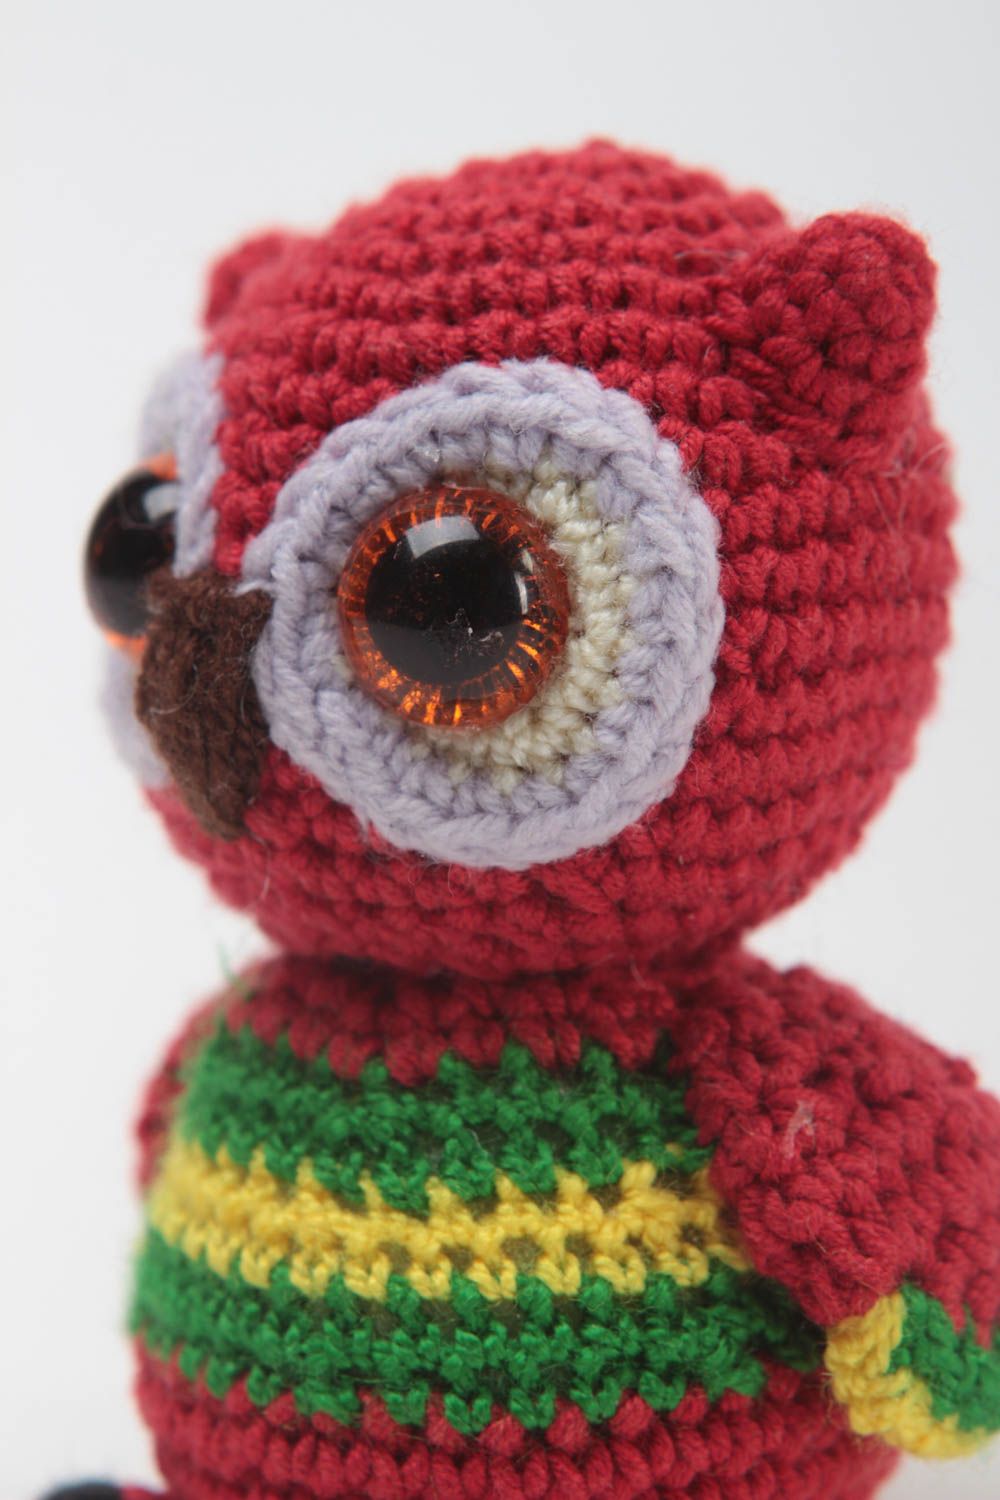 Beautiful handmade crochet toy stuffed soft toy nursery design gifts for kids photo 3